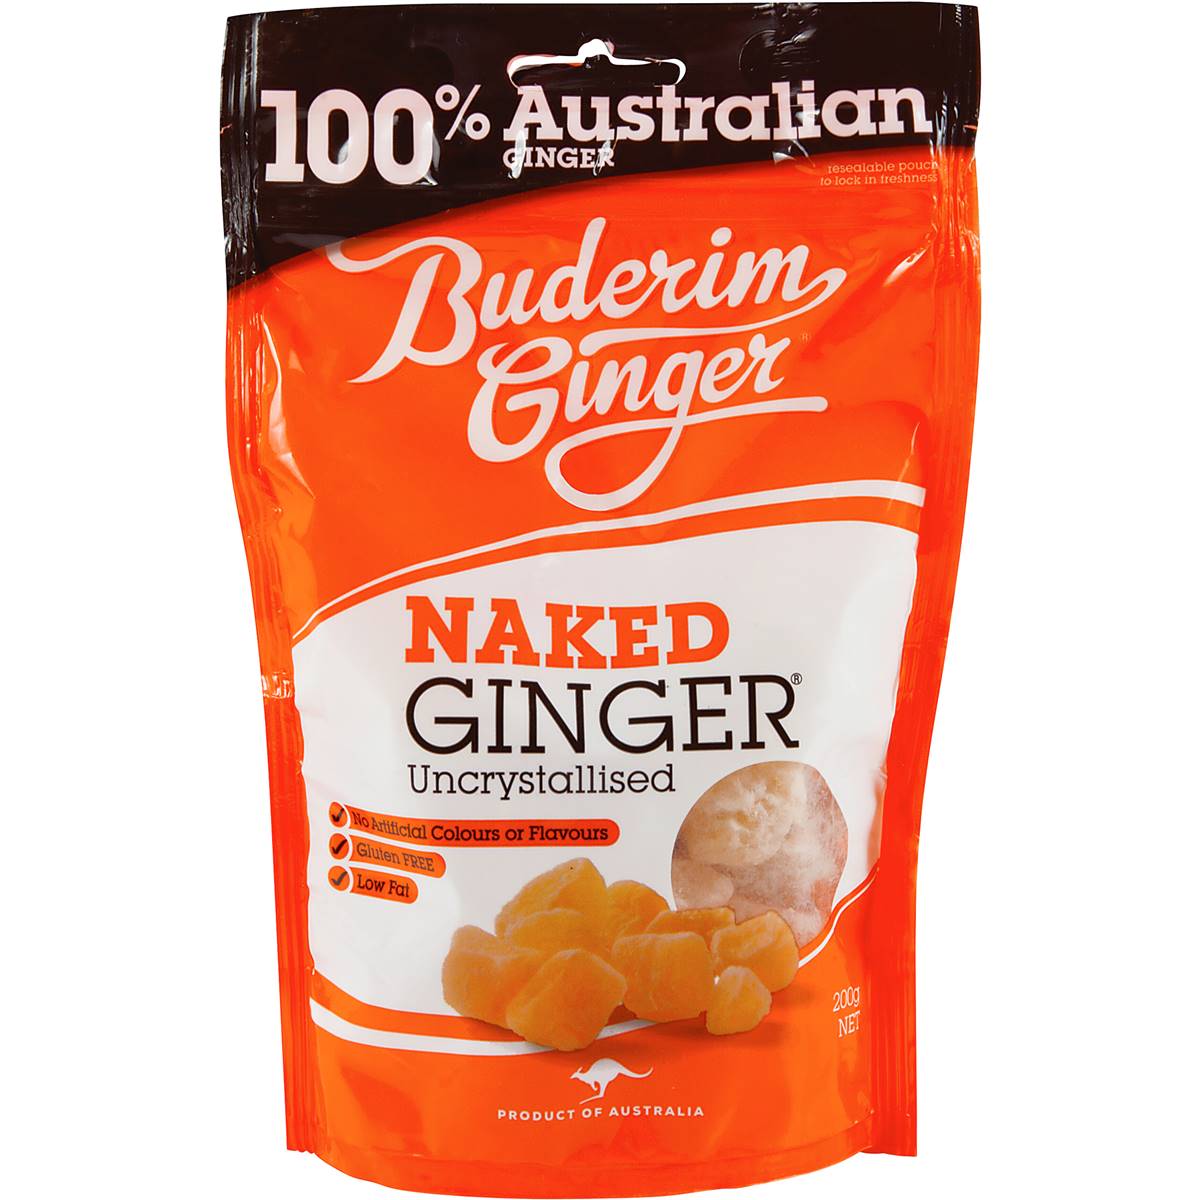 Buderim Ginger Limited Ginger Naked